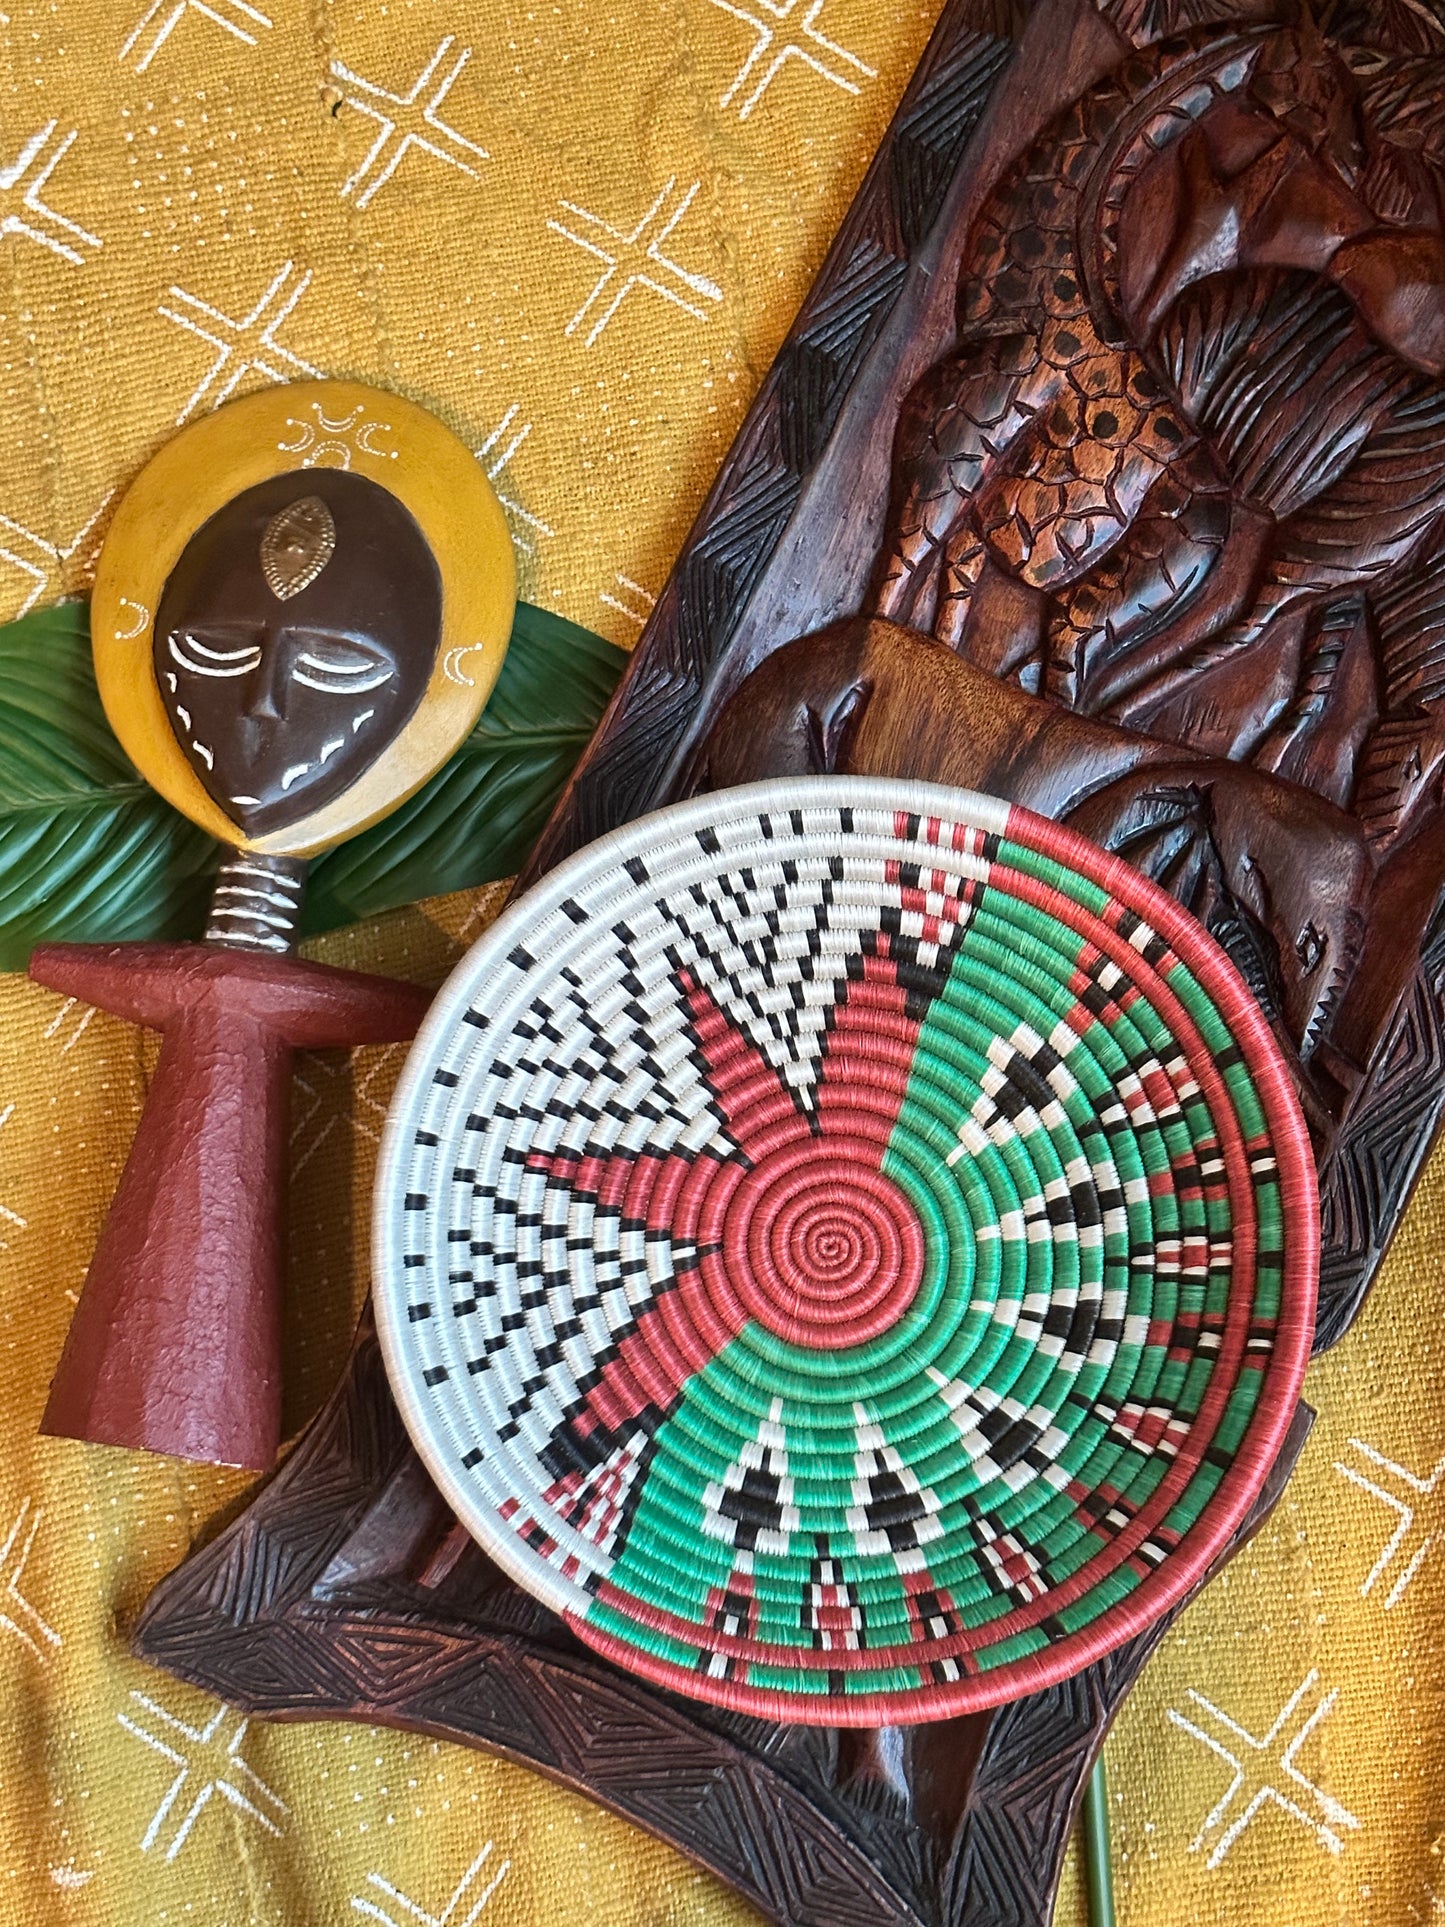 Whimsical Celestial Harmony Woven African Basket